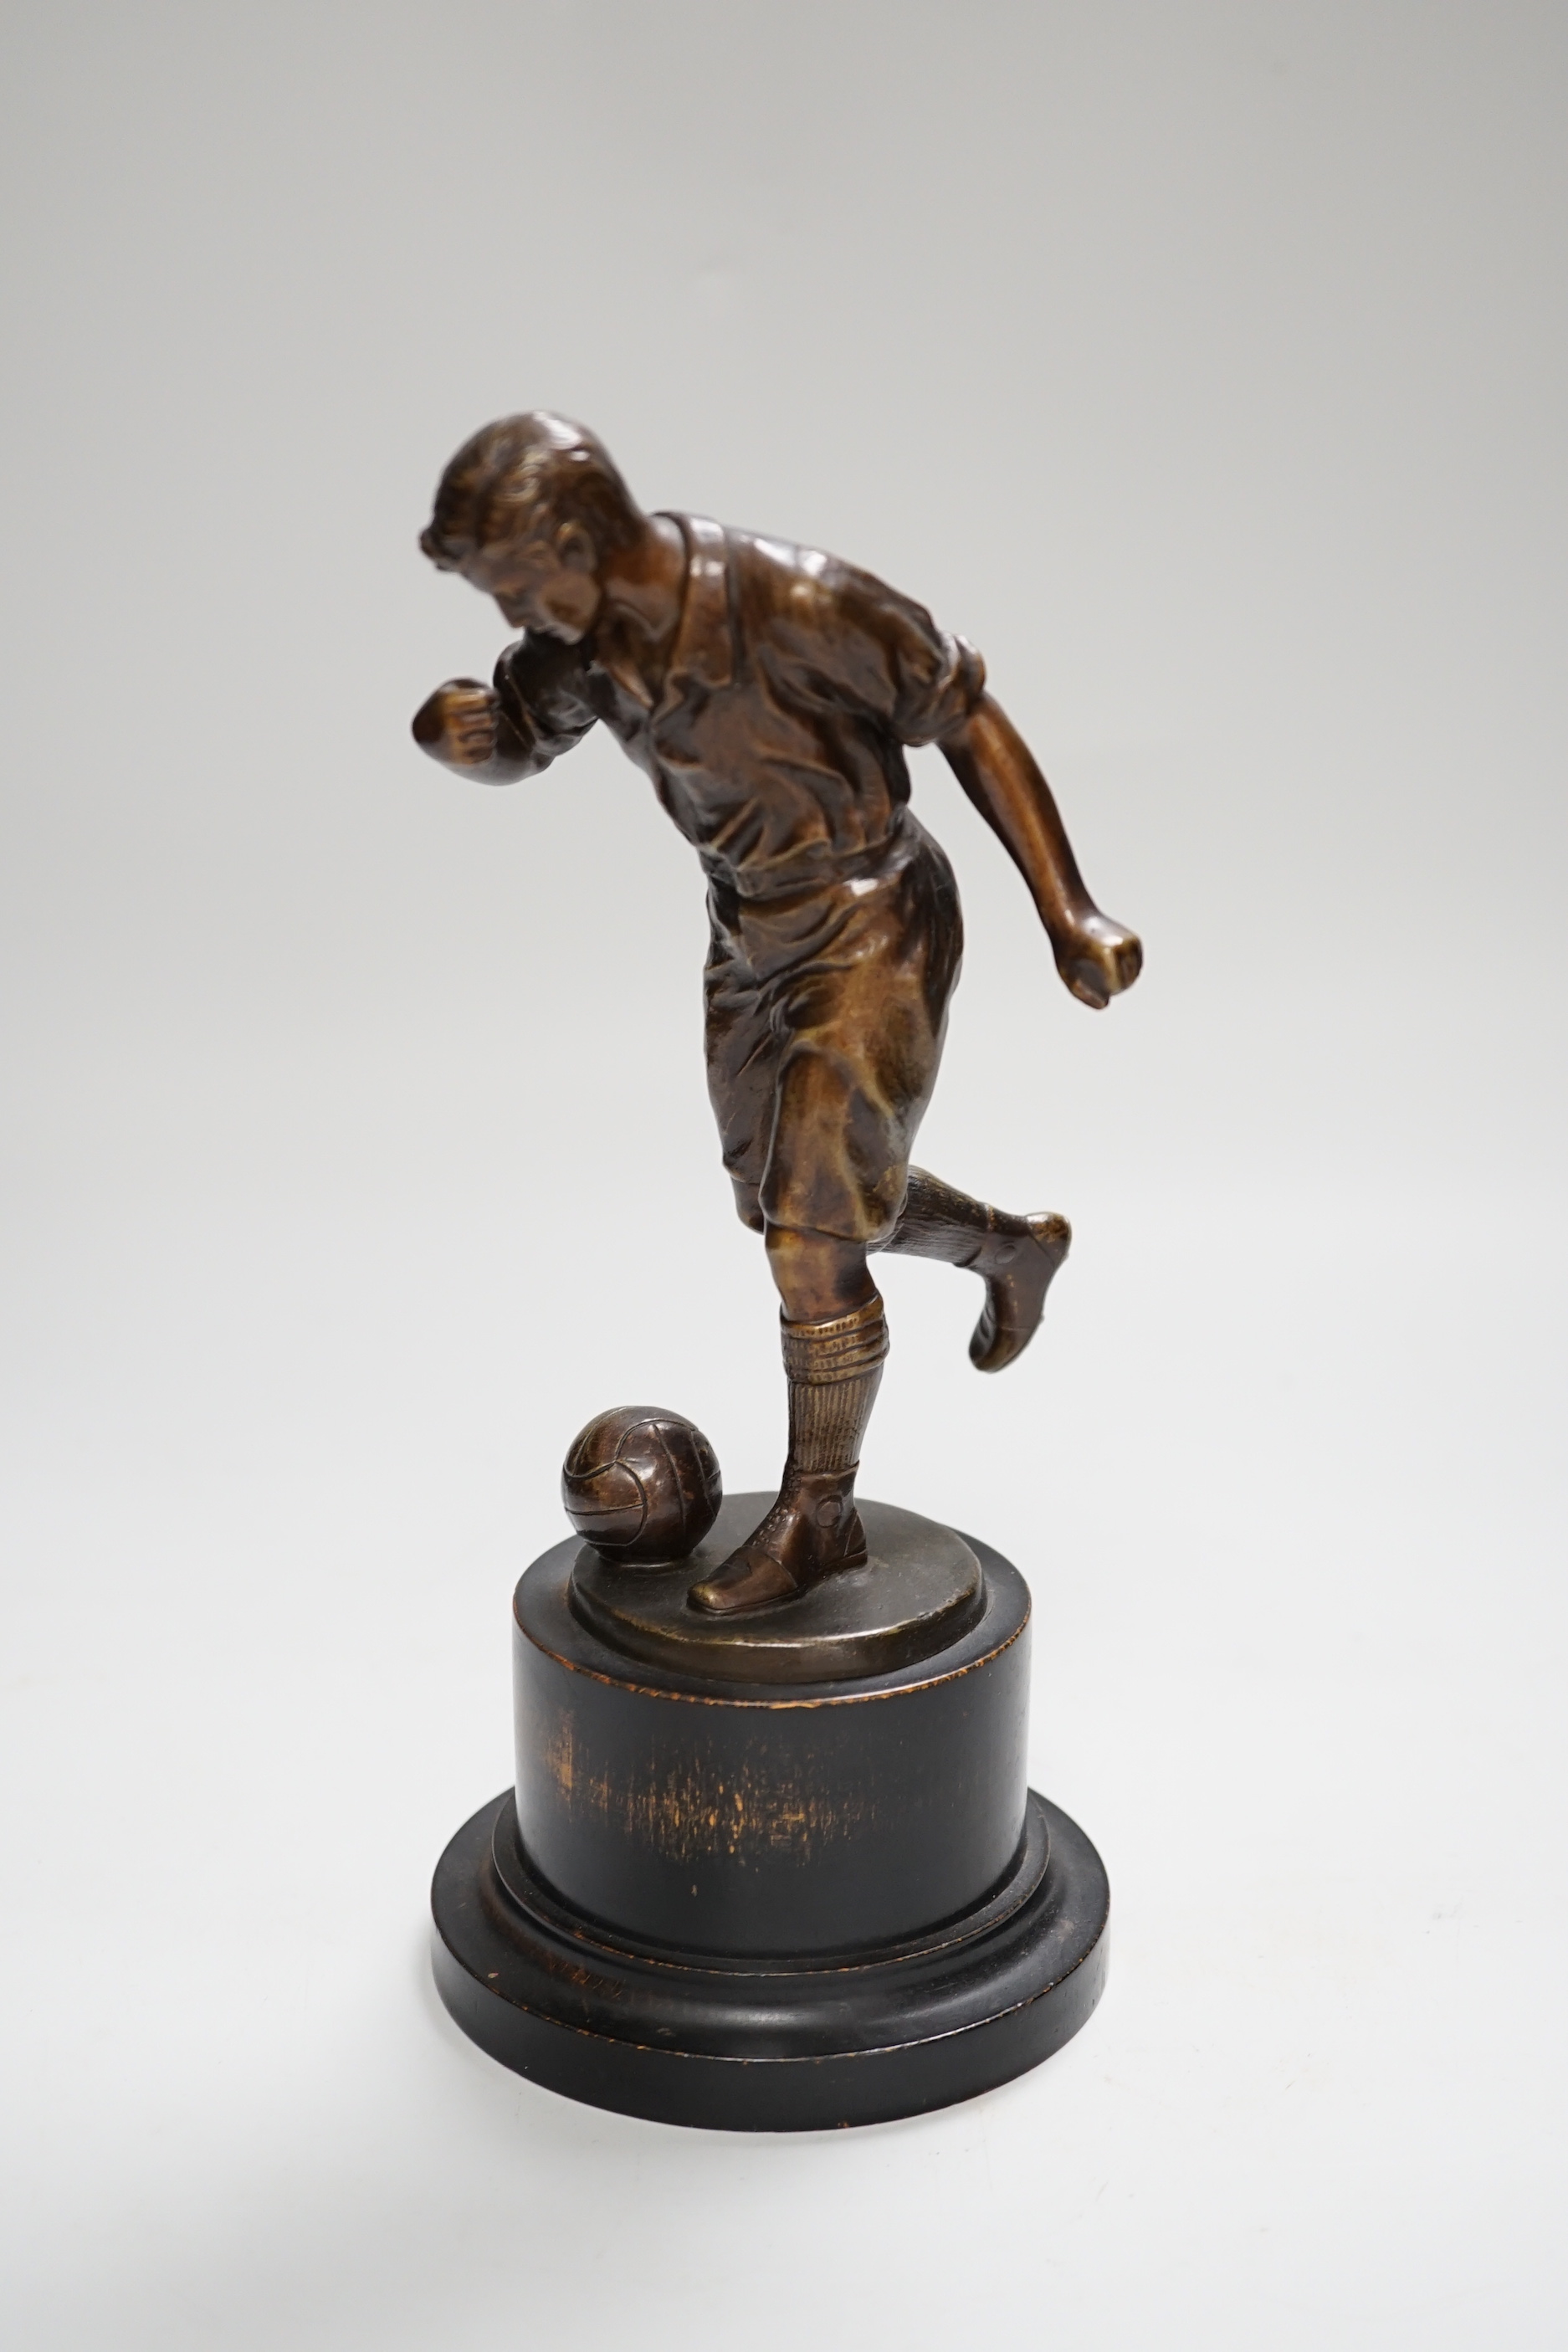 A pre-war bronze figure of a footballer, raised on a circular ebonies wood base, 23cm high